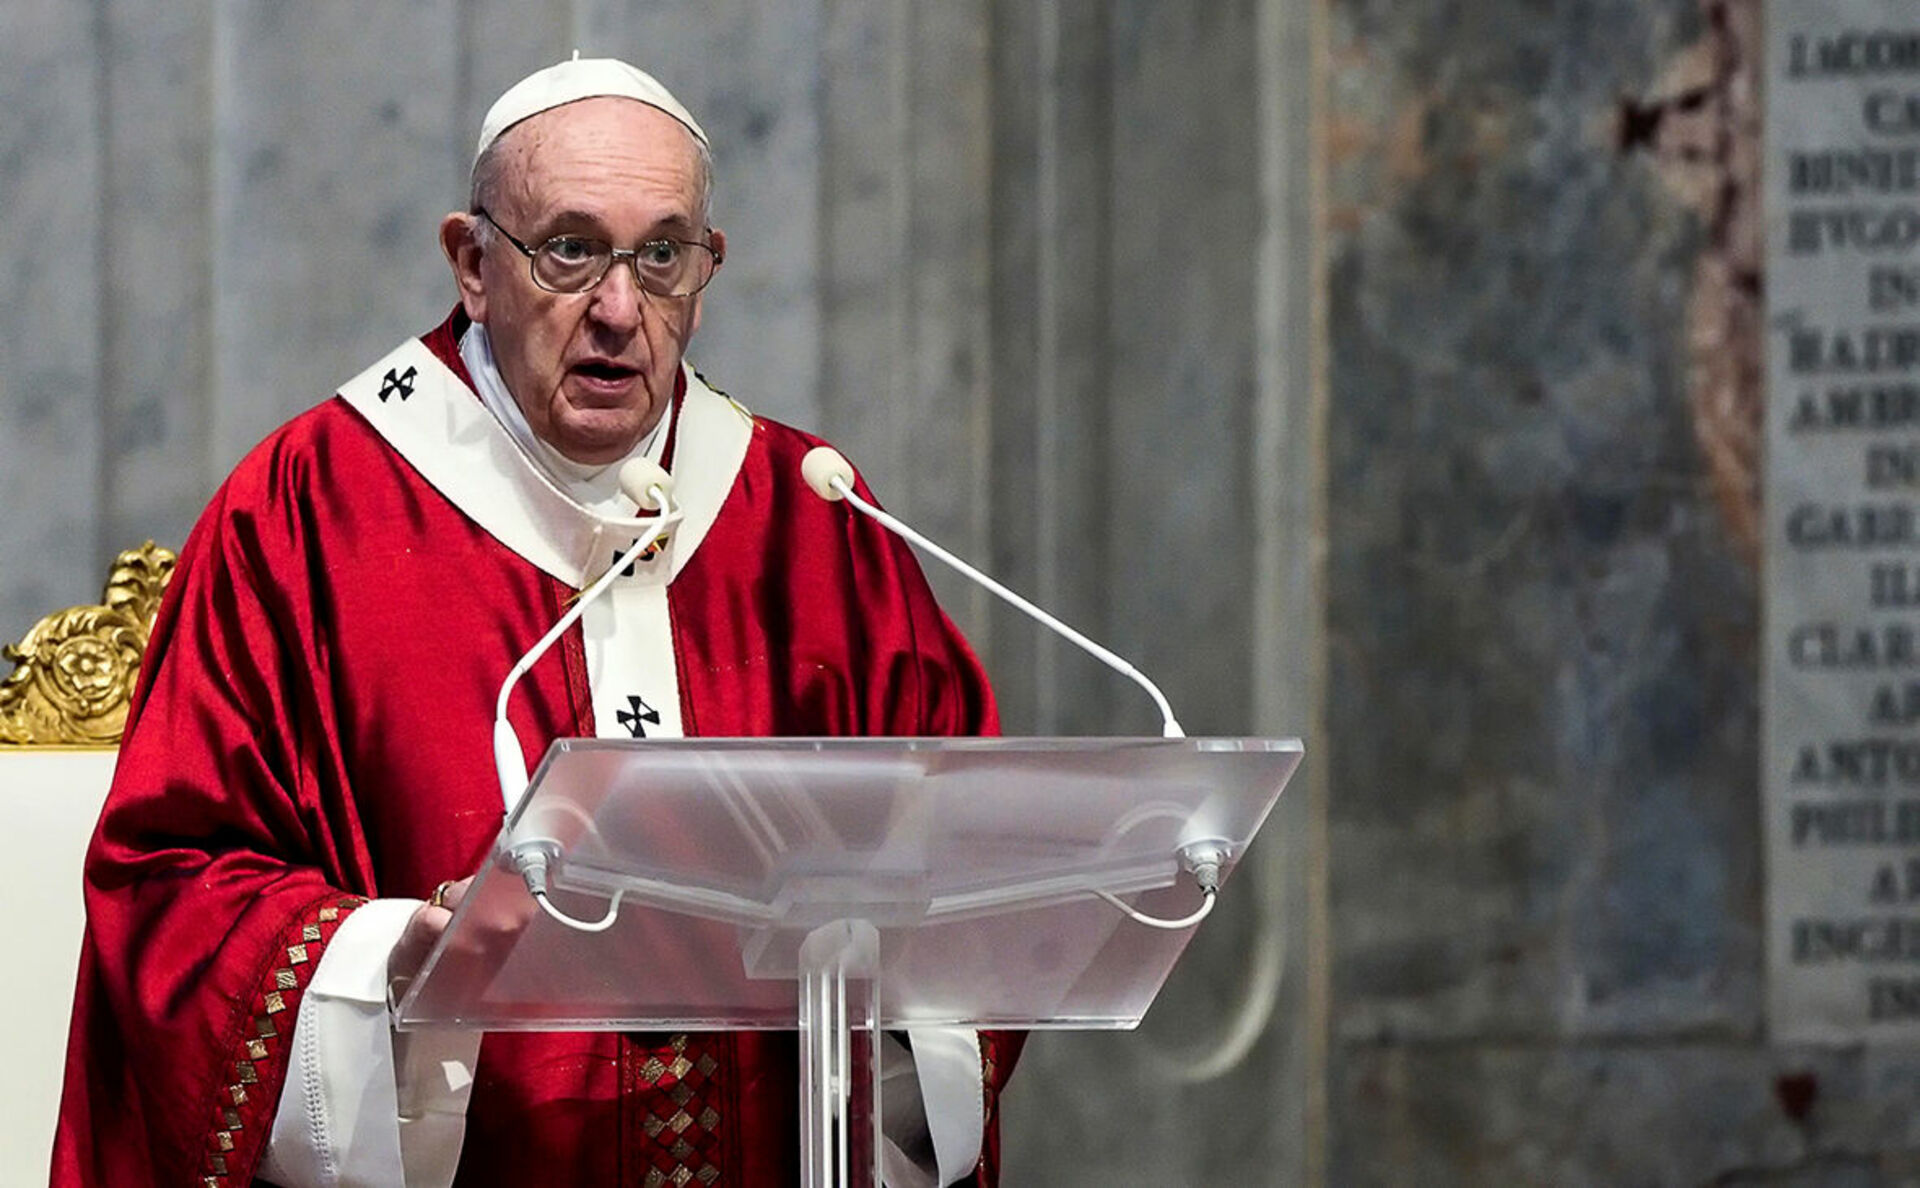 Франциск (папа Римский). Папа Римский Франциск 2020. Папа Римский Франциск 2022. Франциск 1 папа Римский.